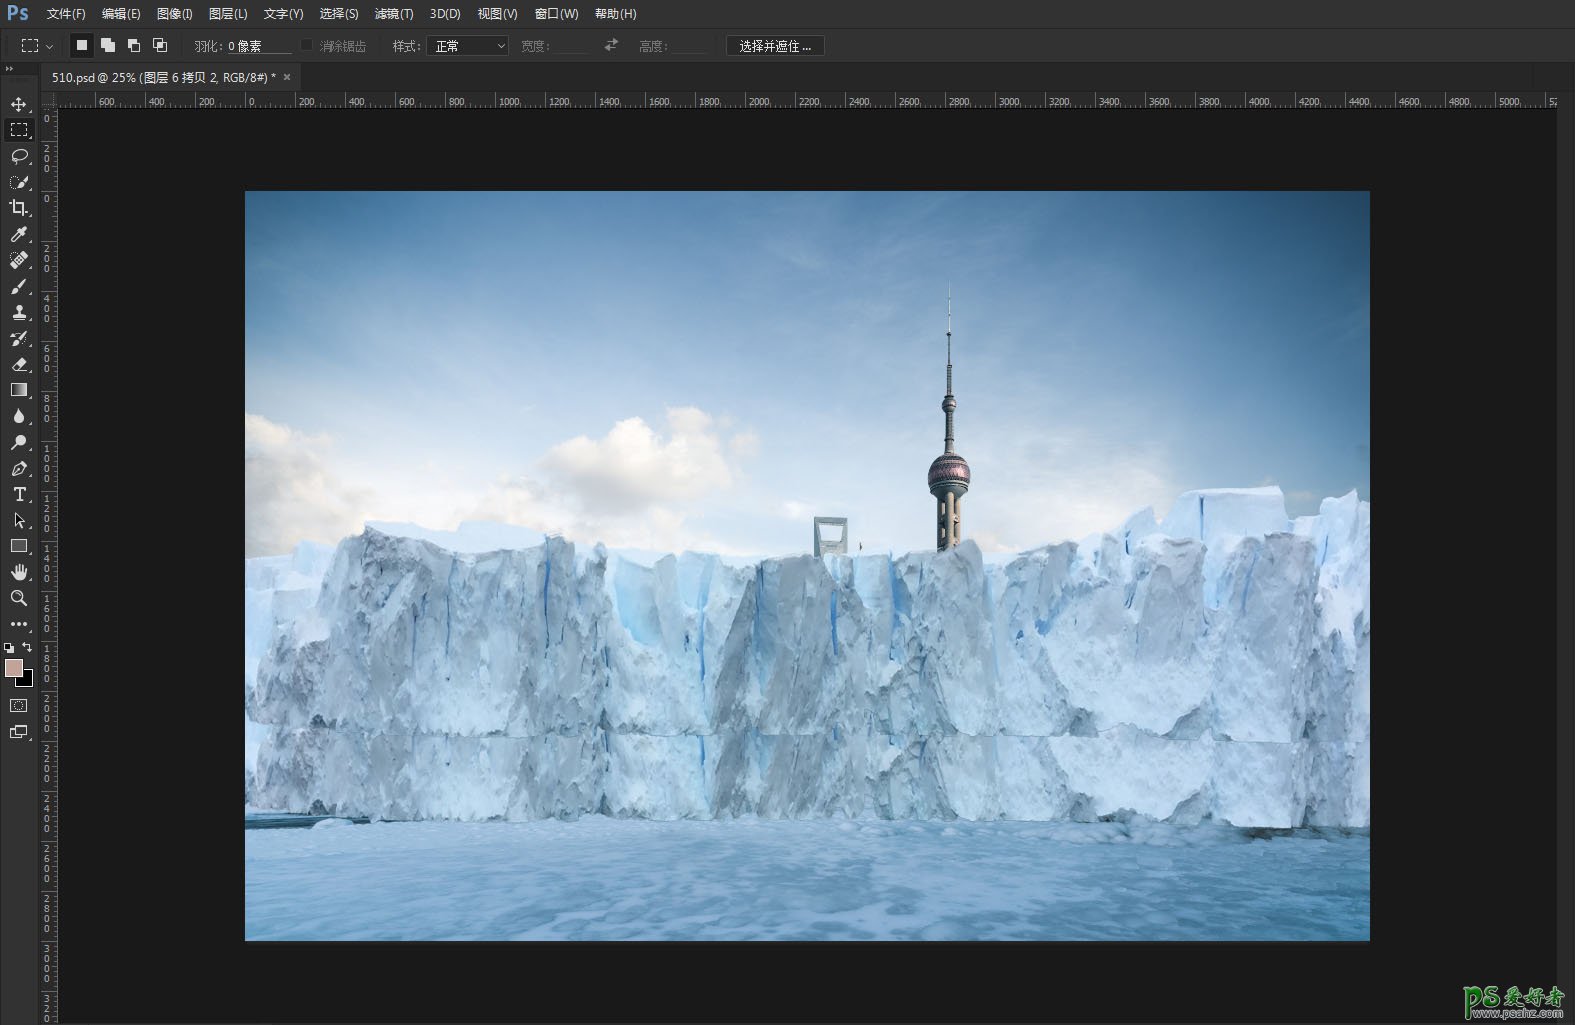 PS场景合成实例：创意打造一张奇幻风格的冰封城市场景图片。